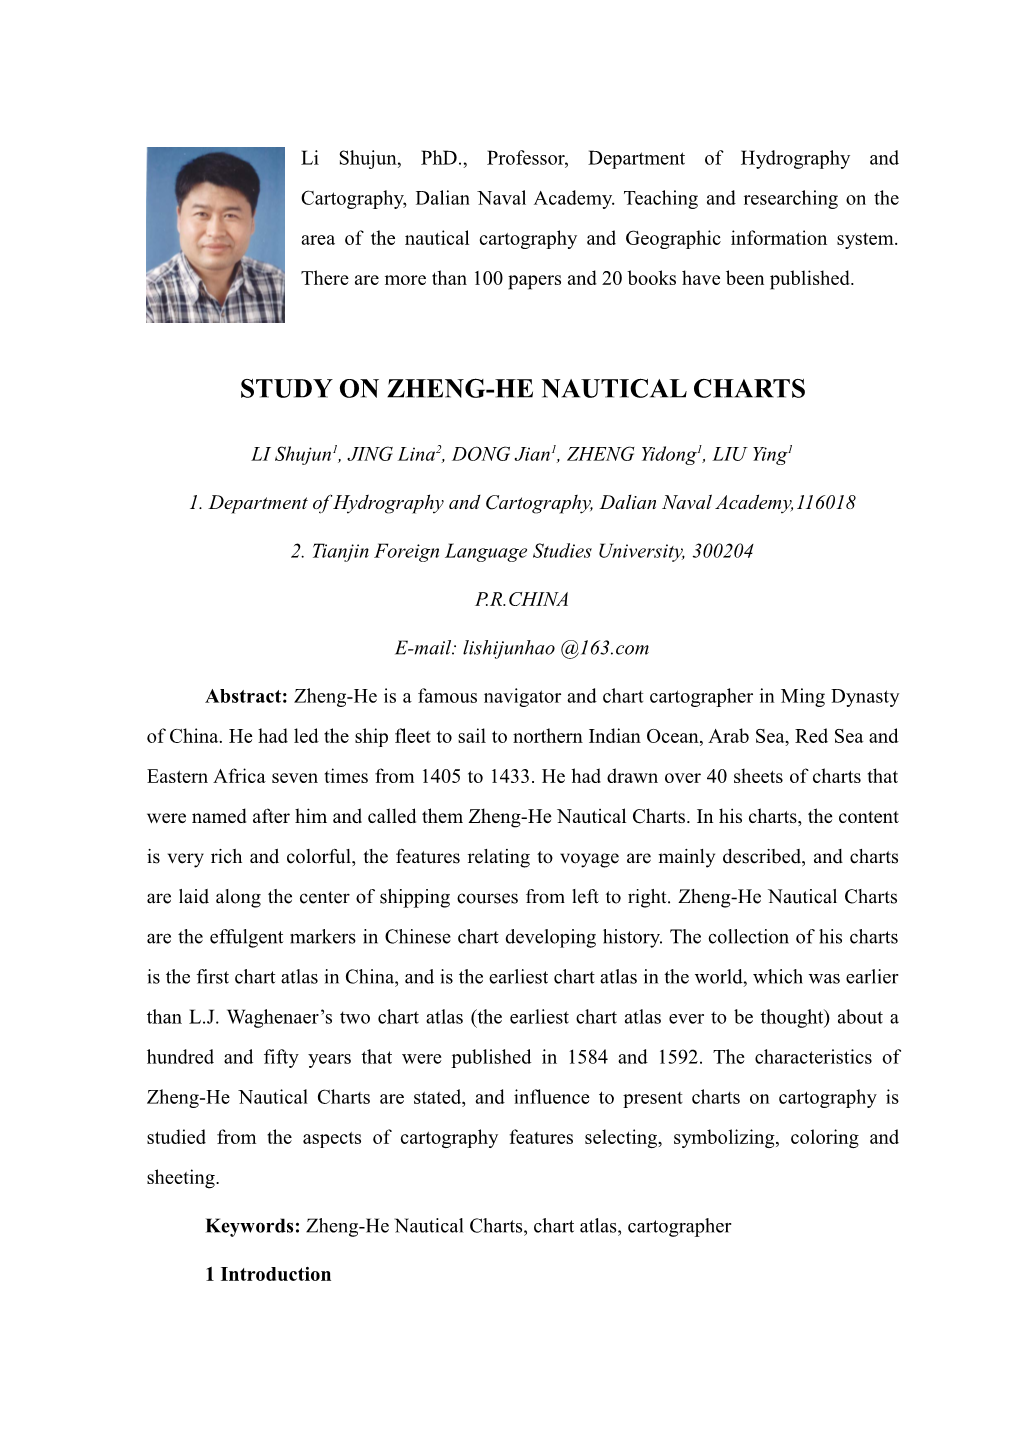 Study on Zheng-He Nautical Charts